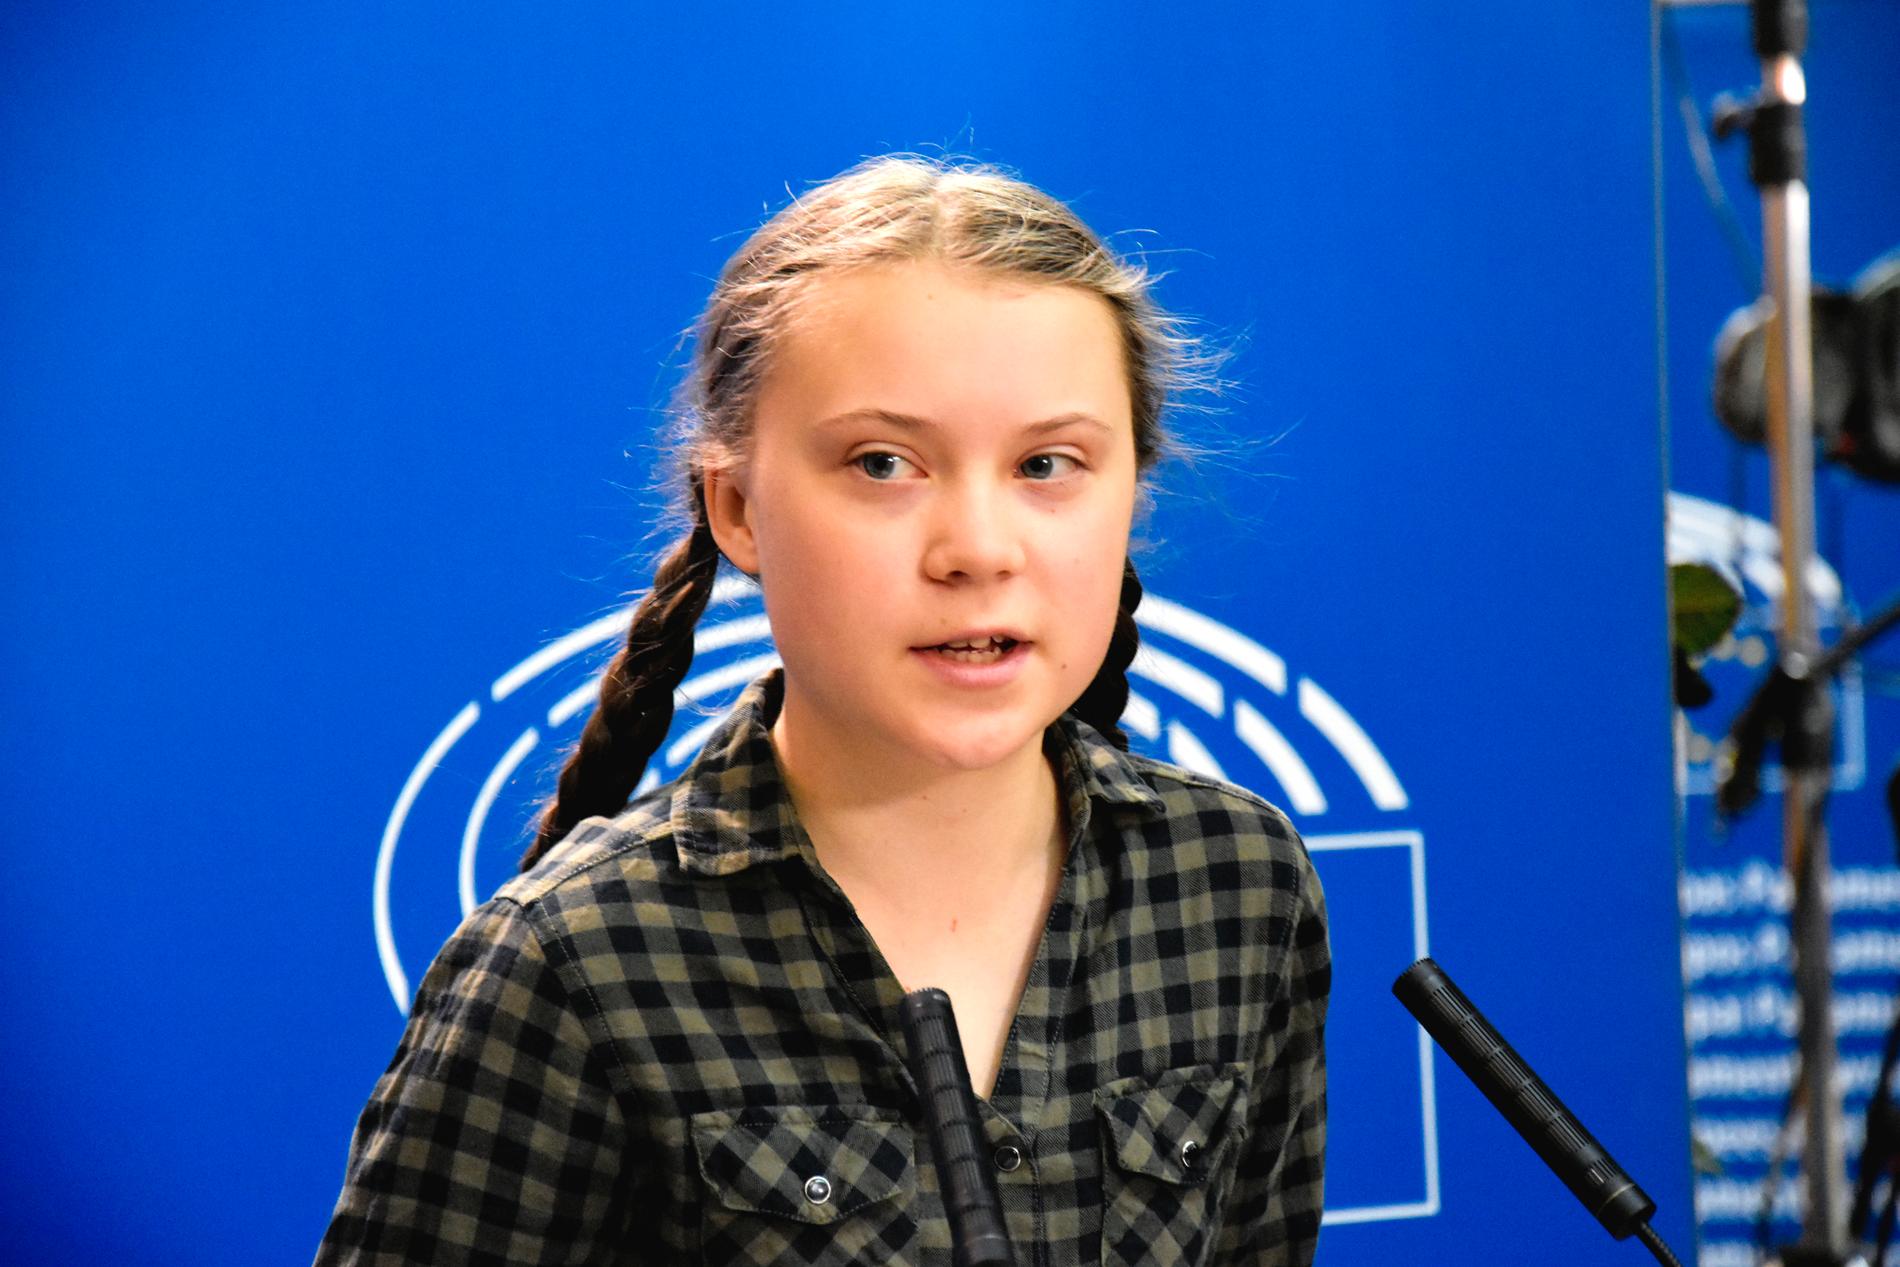 Klimataktivisten Greta Thunberg håller presskonferens i EU-parlamentet i Strasbourg i april i år. Arkivbild.